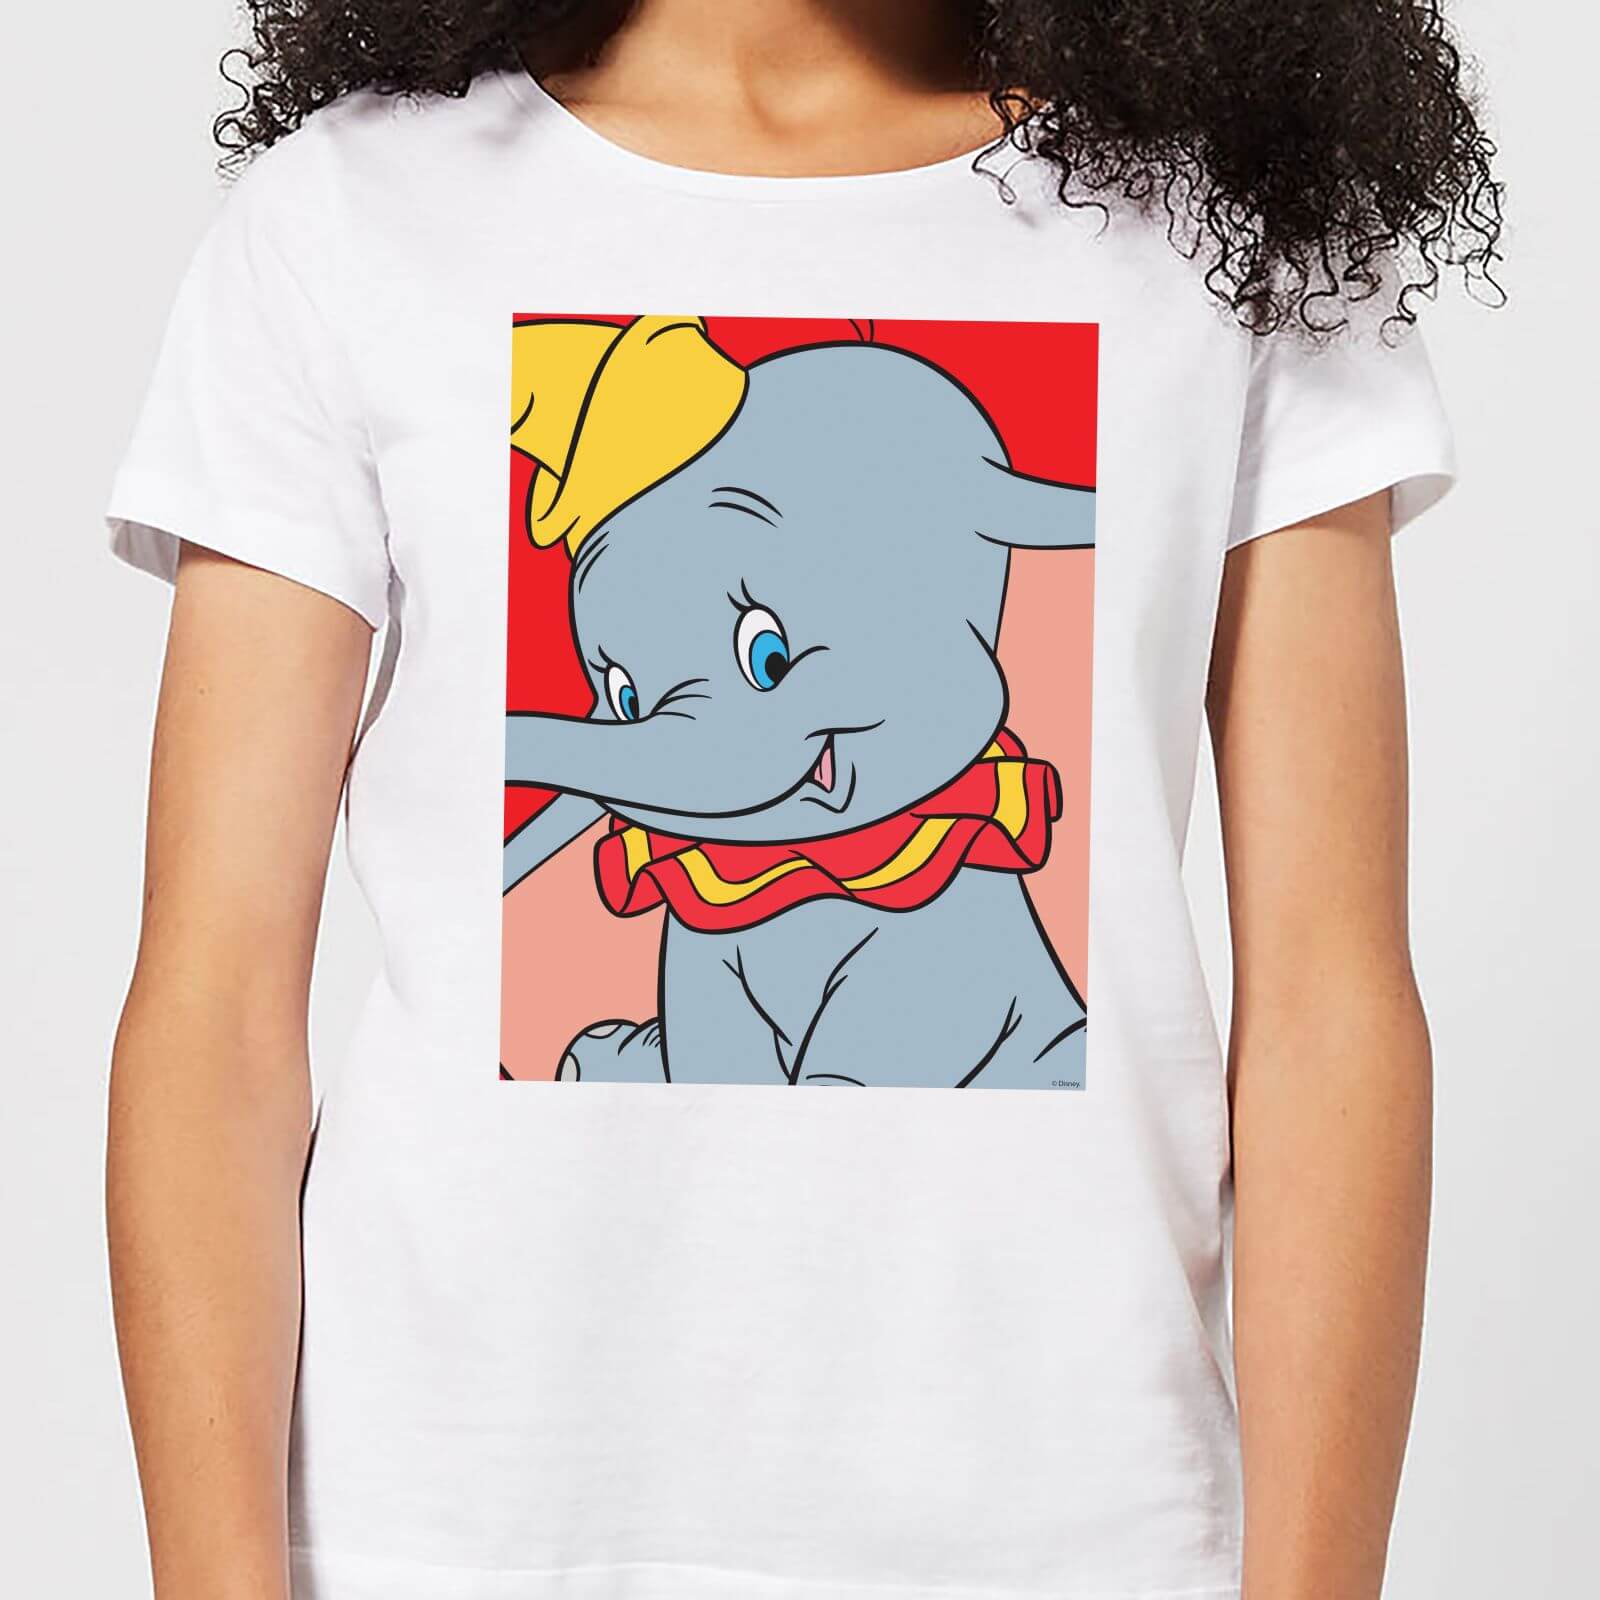 Dumbo Portrait Women's T-Shirt - White - S